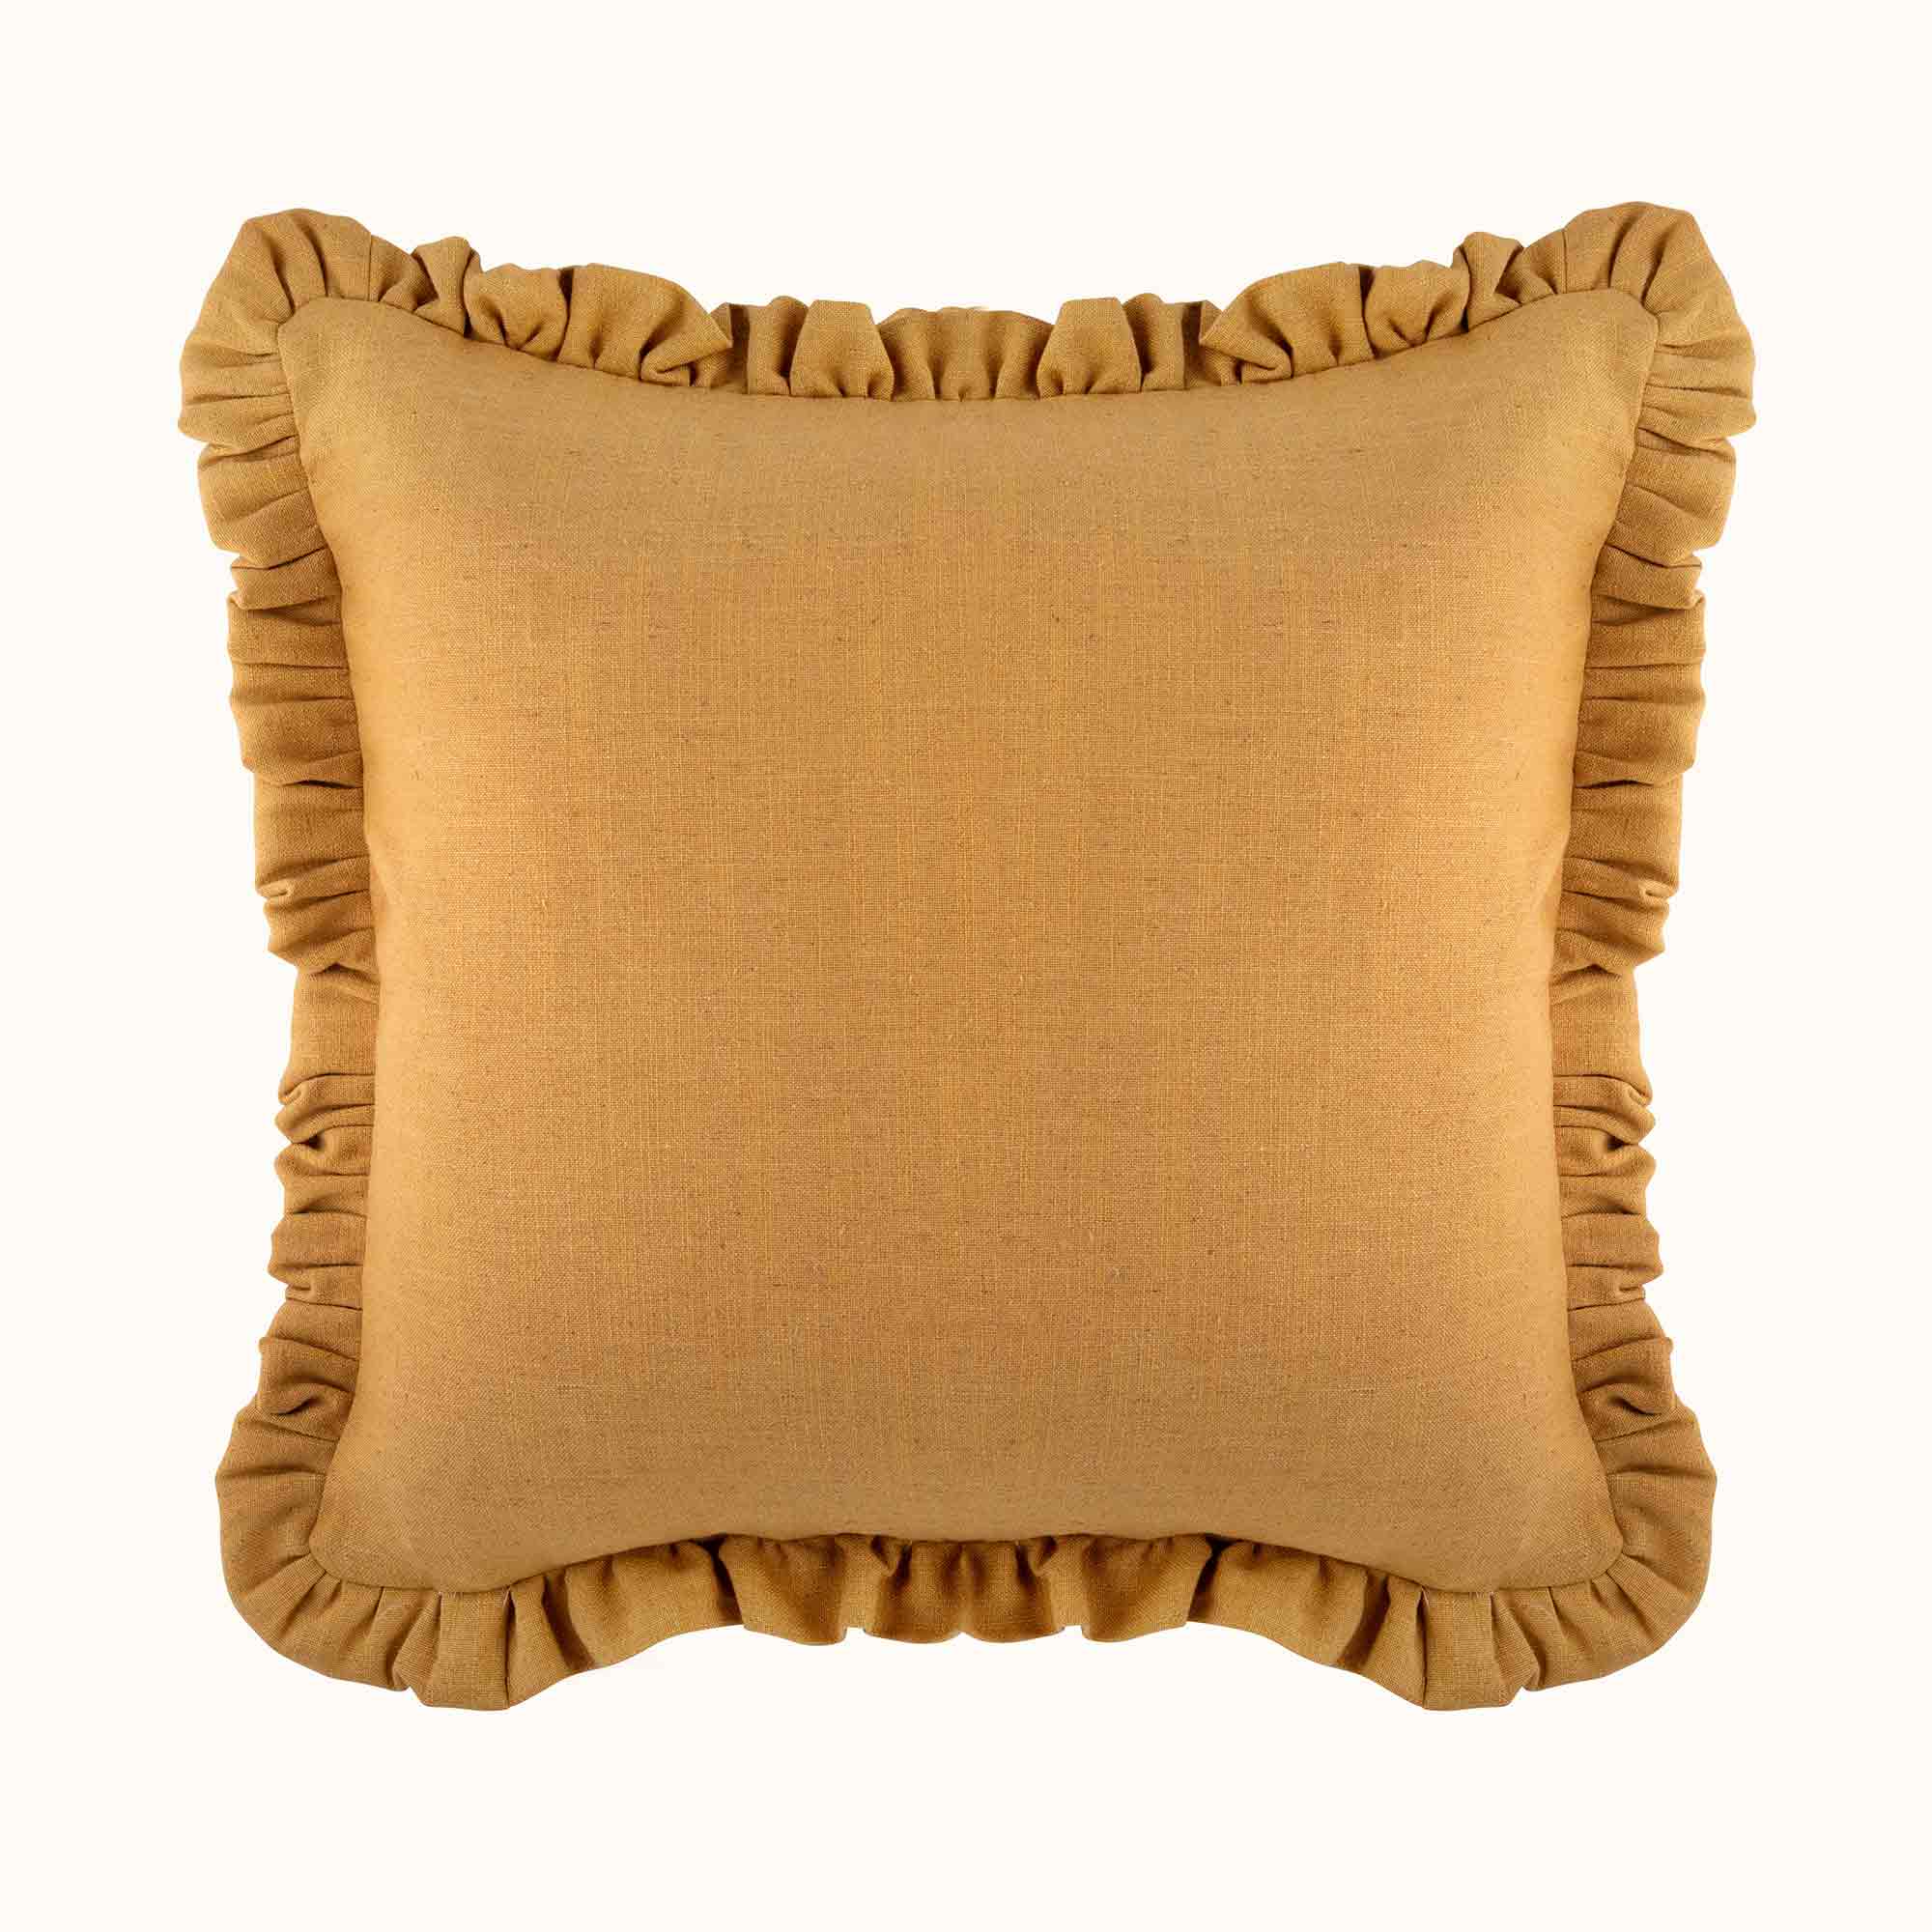 55cm x 55cm Square Cushion with Ruffles